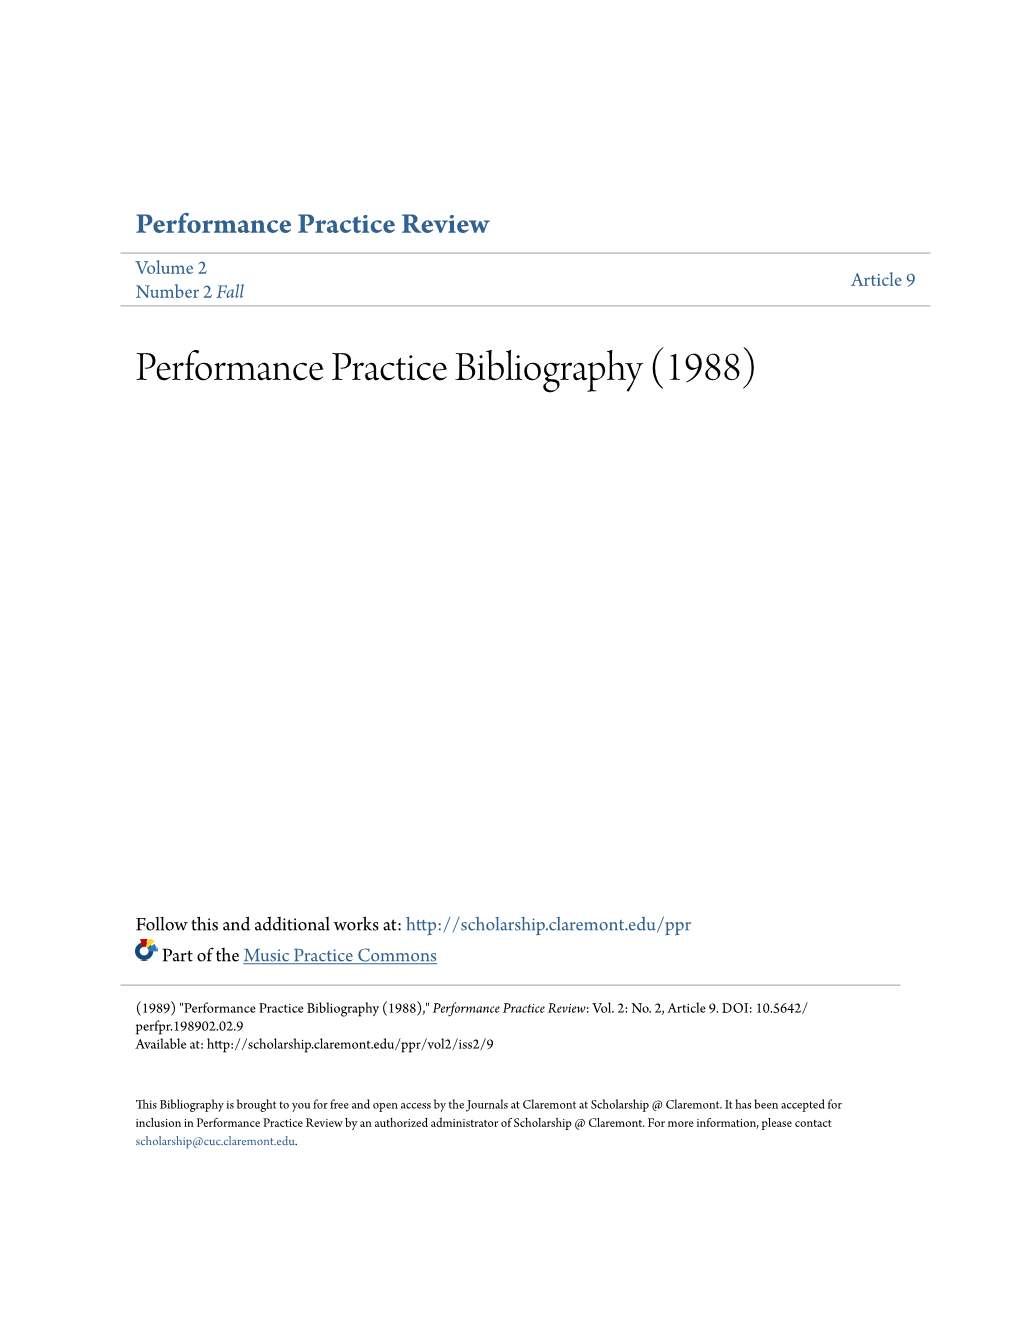 Performance Practice Bibliography (1988)